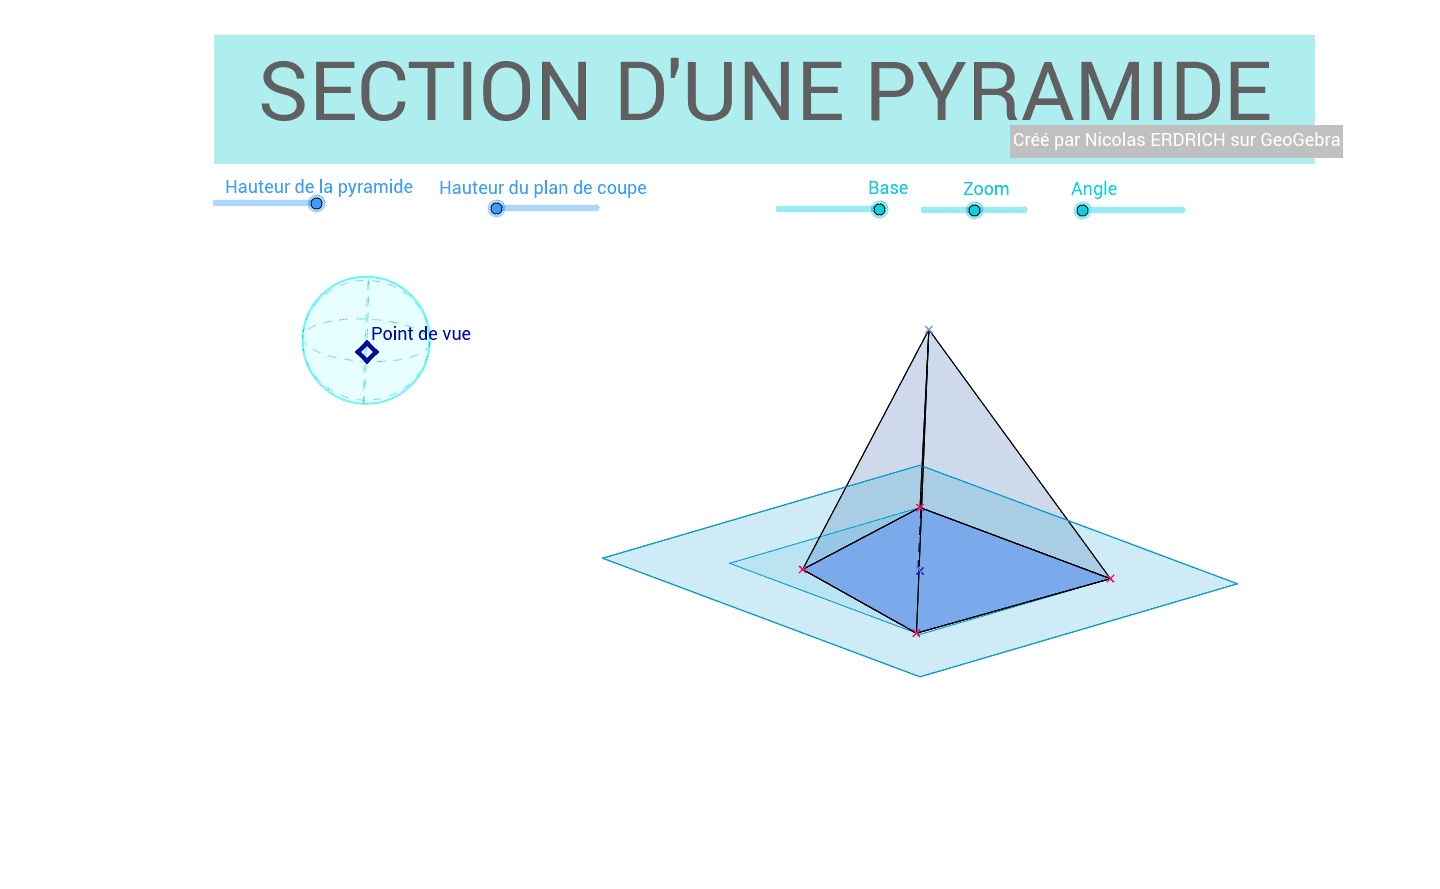 Section Dune Pyramide Geogebra